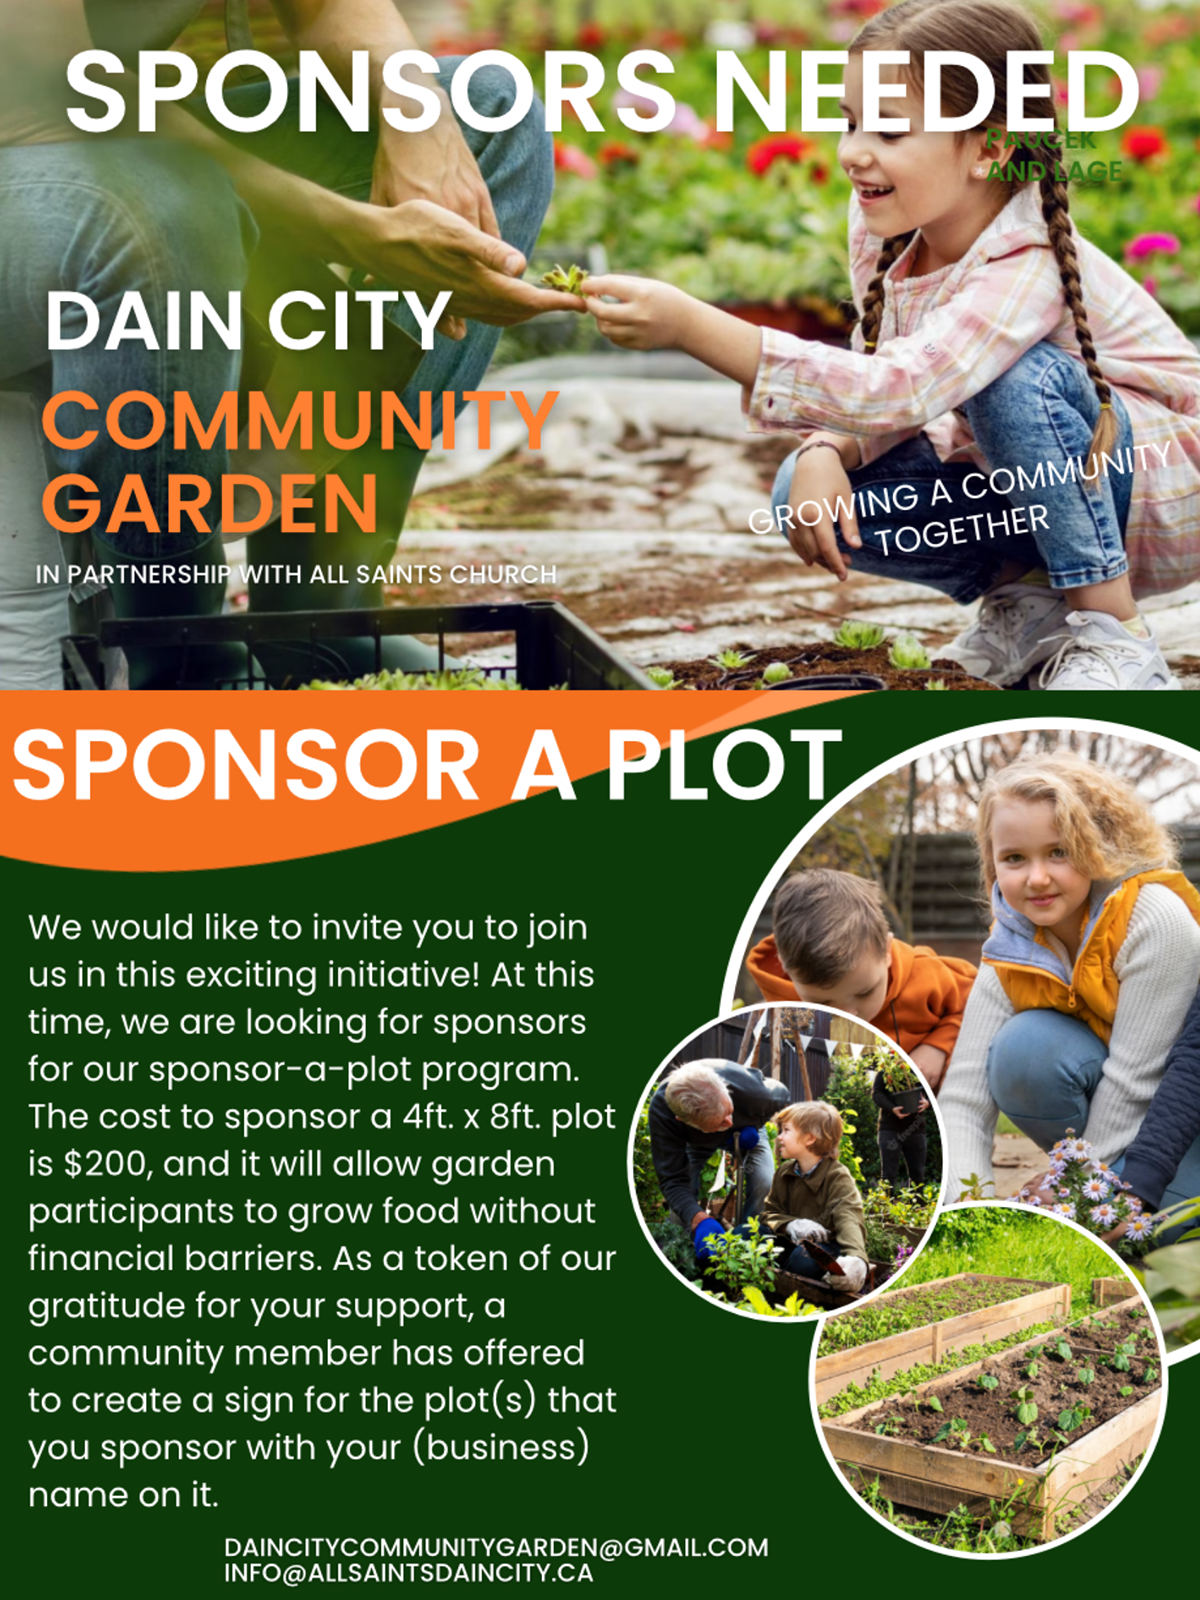 Dain City Community Garden: Sponsors Needed